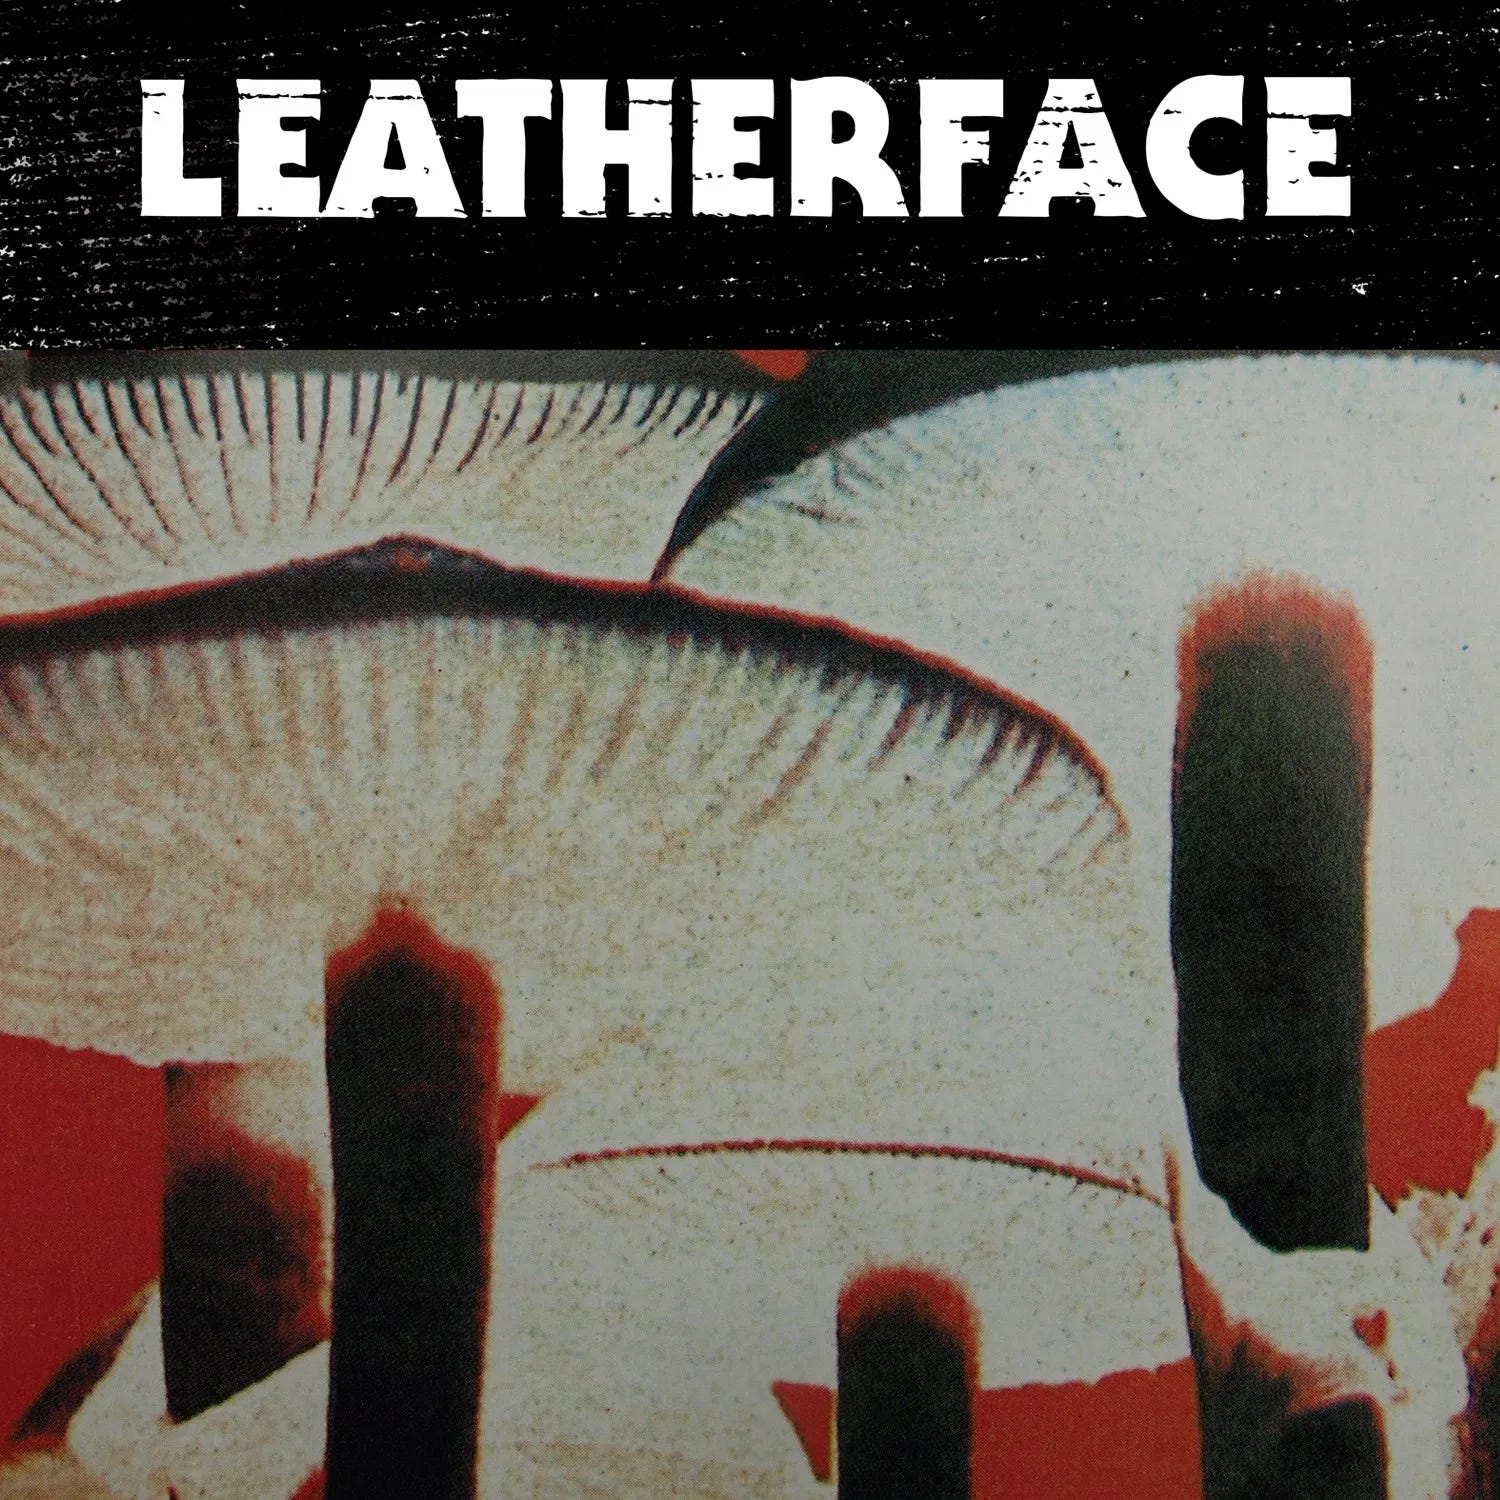 Notes On Leatherface, Baking Potatoes - by Zachary Lipez